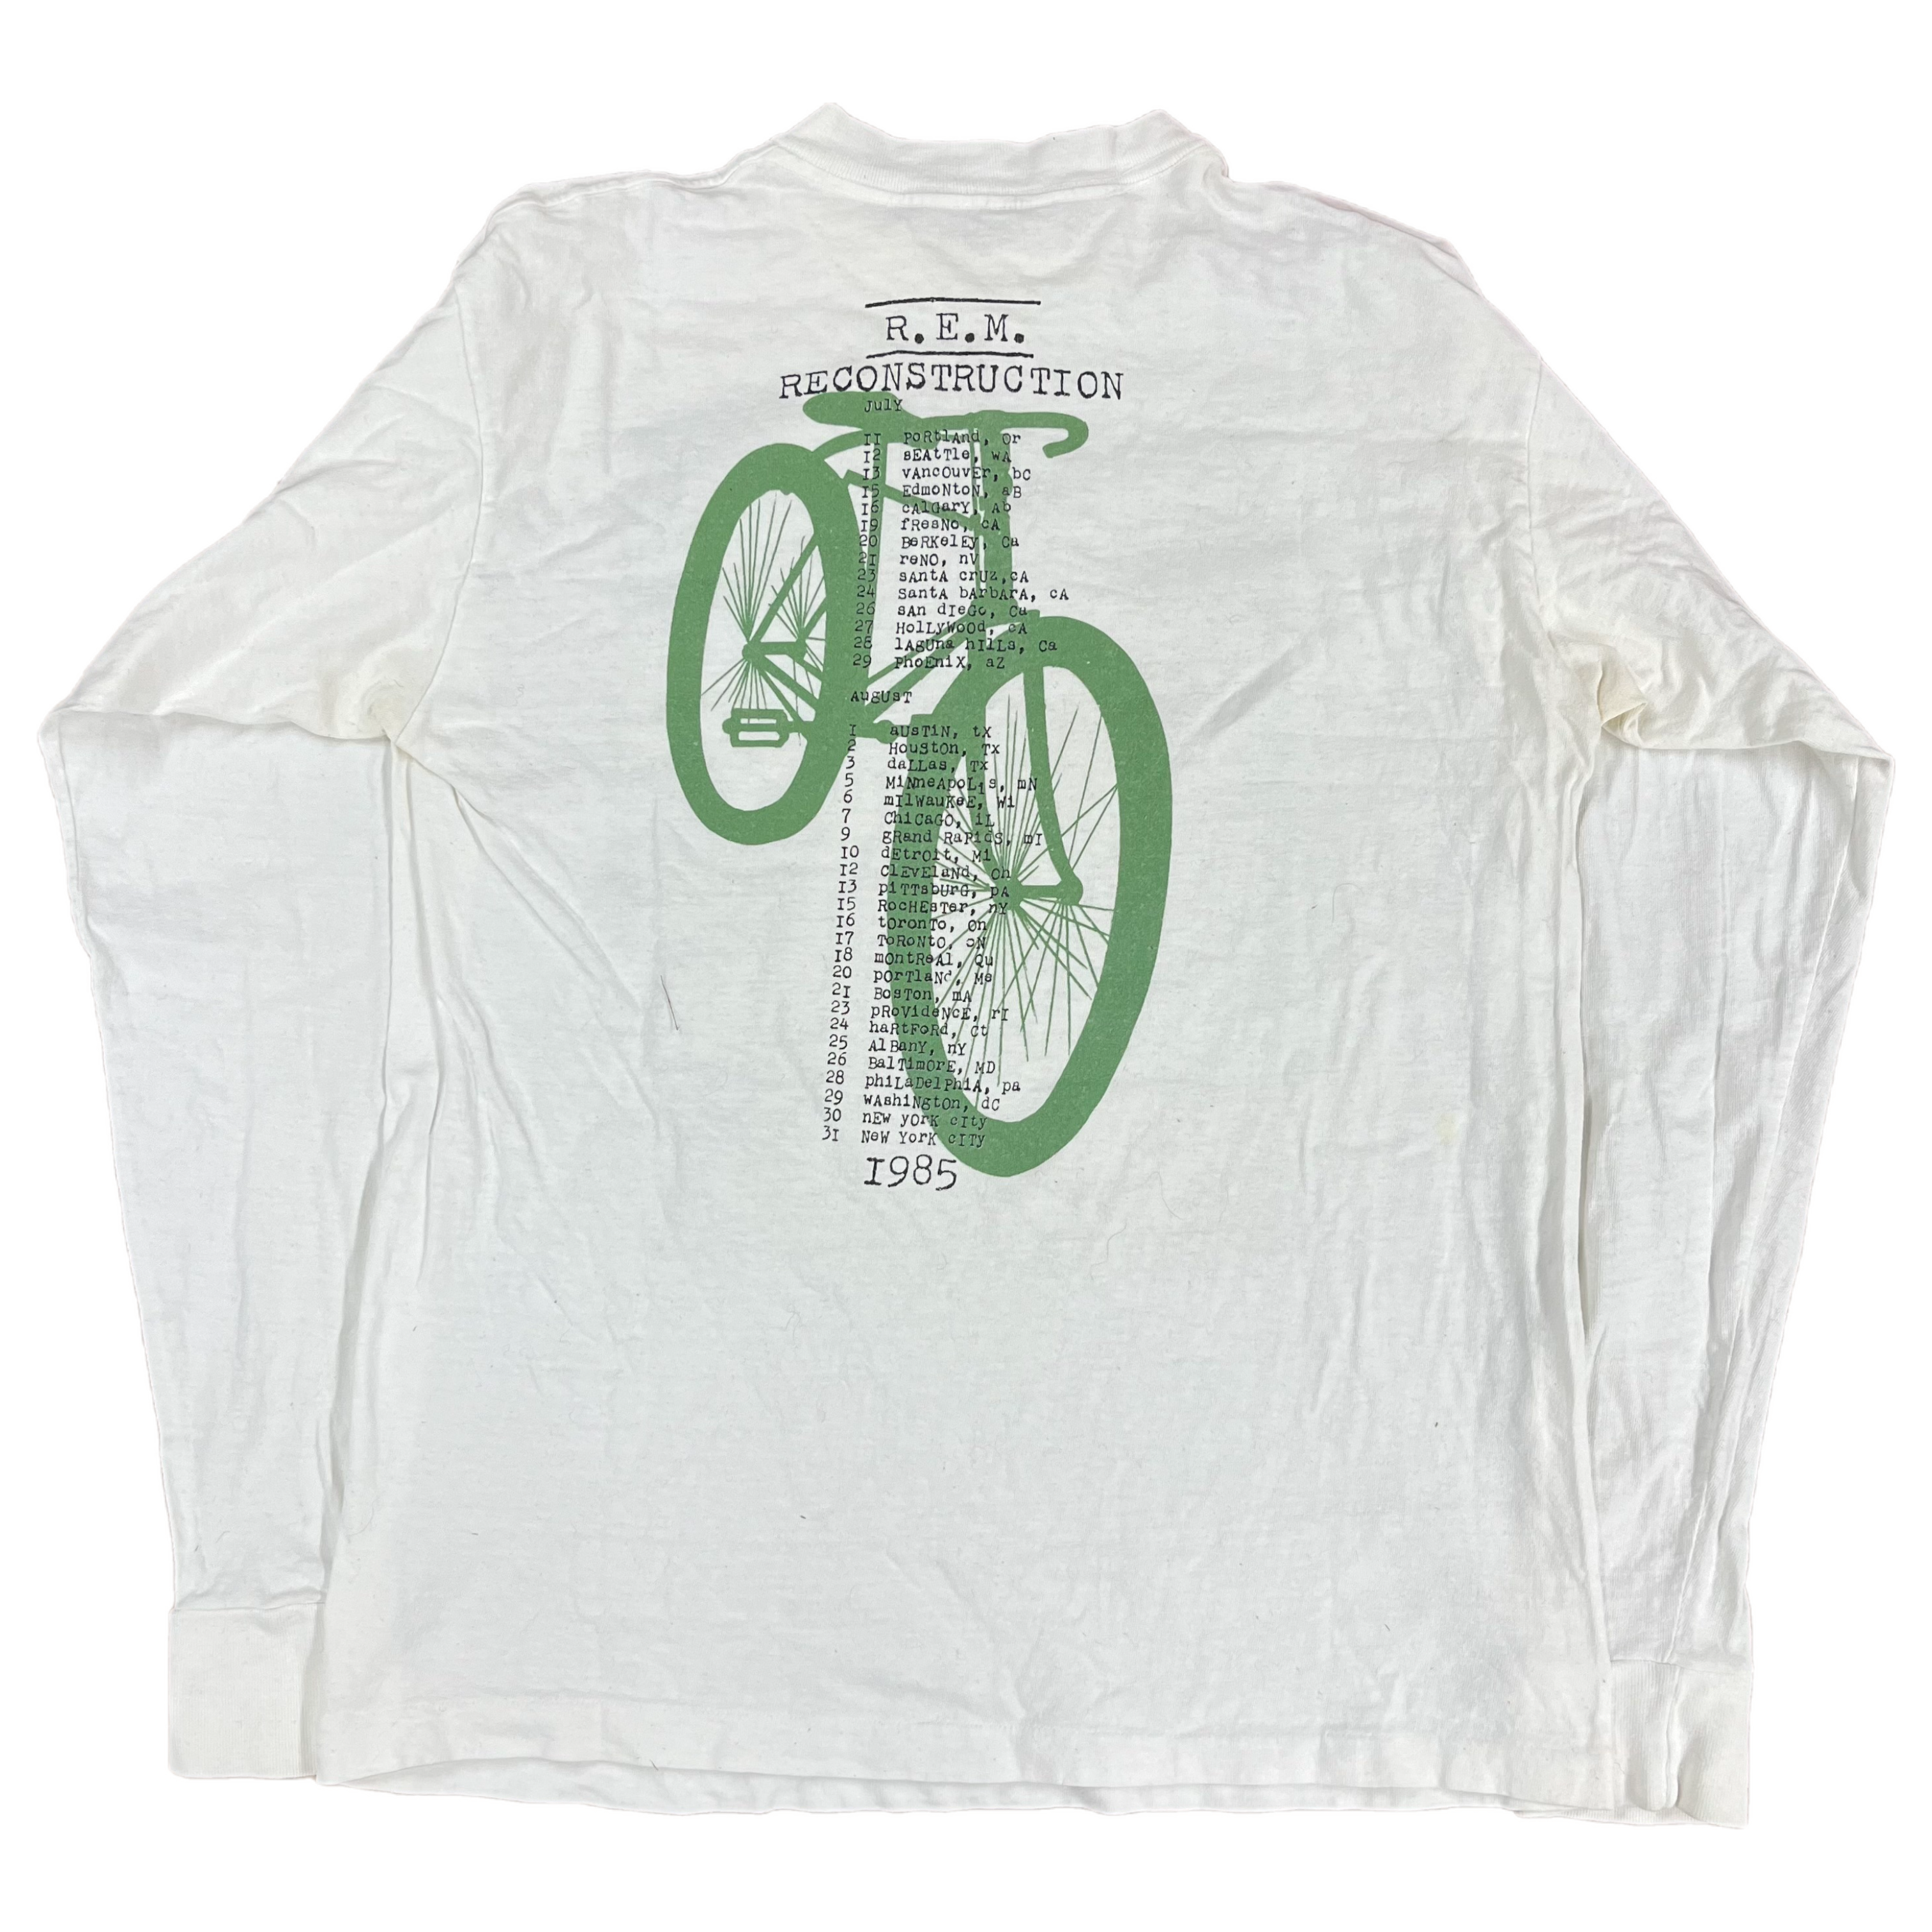 Vintage R.E.M. "Reconstruction" Adidas Long Sleeve Shirt jointcustodydc